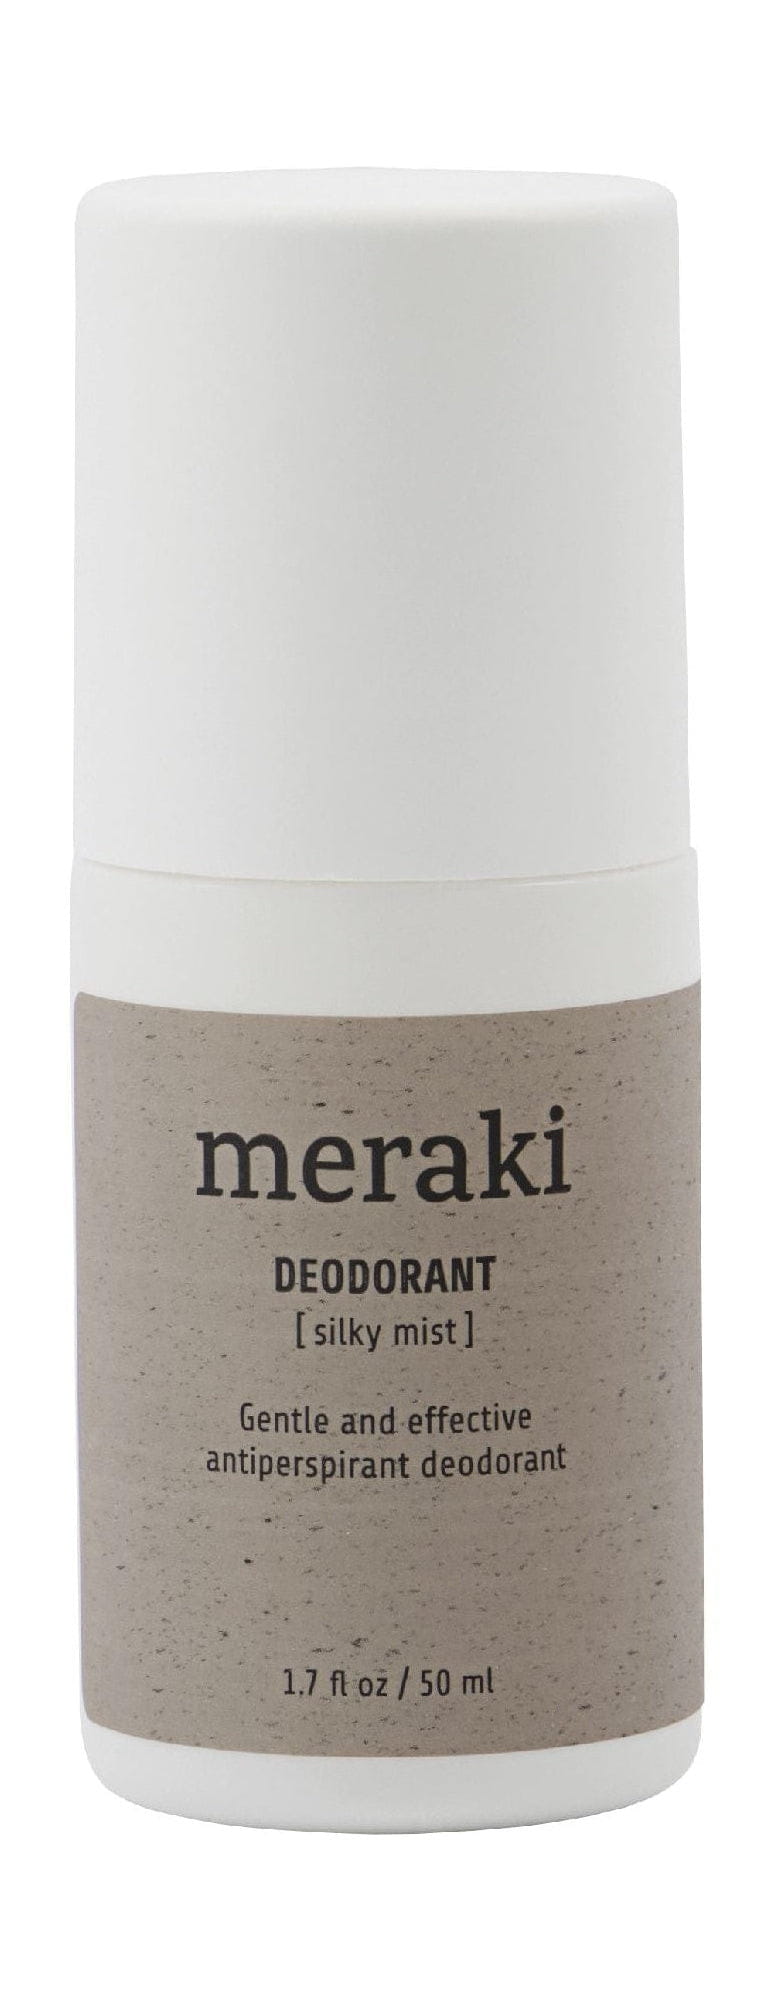 Meraki Deodorant 50 Ml, Silky Mist